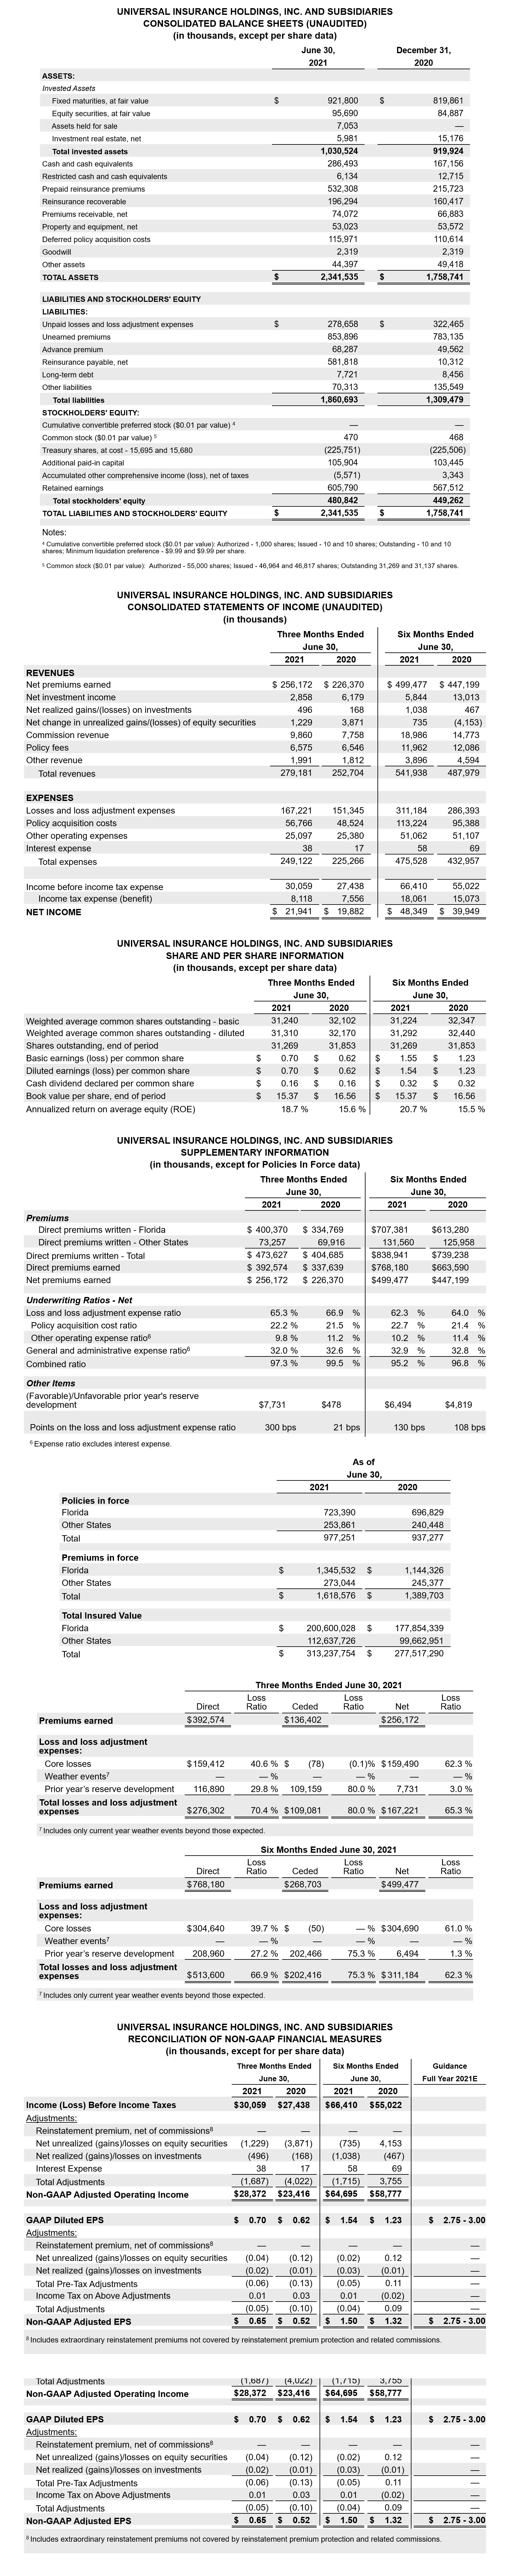 2021Q2 - 5 - Consolidated Balance Sheet